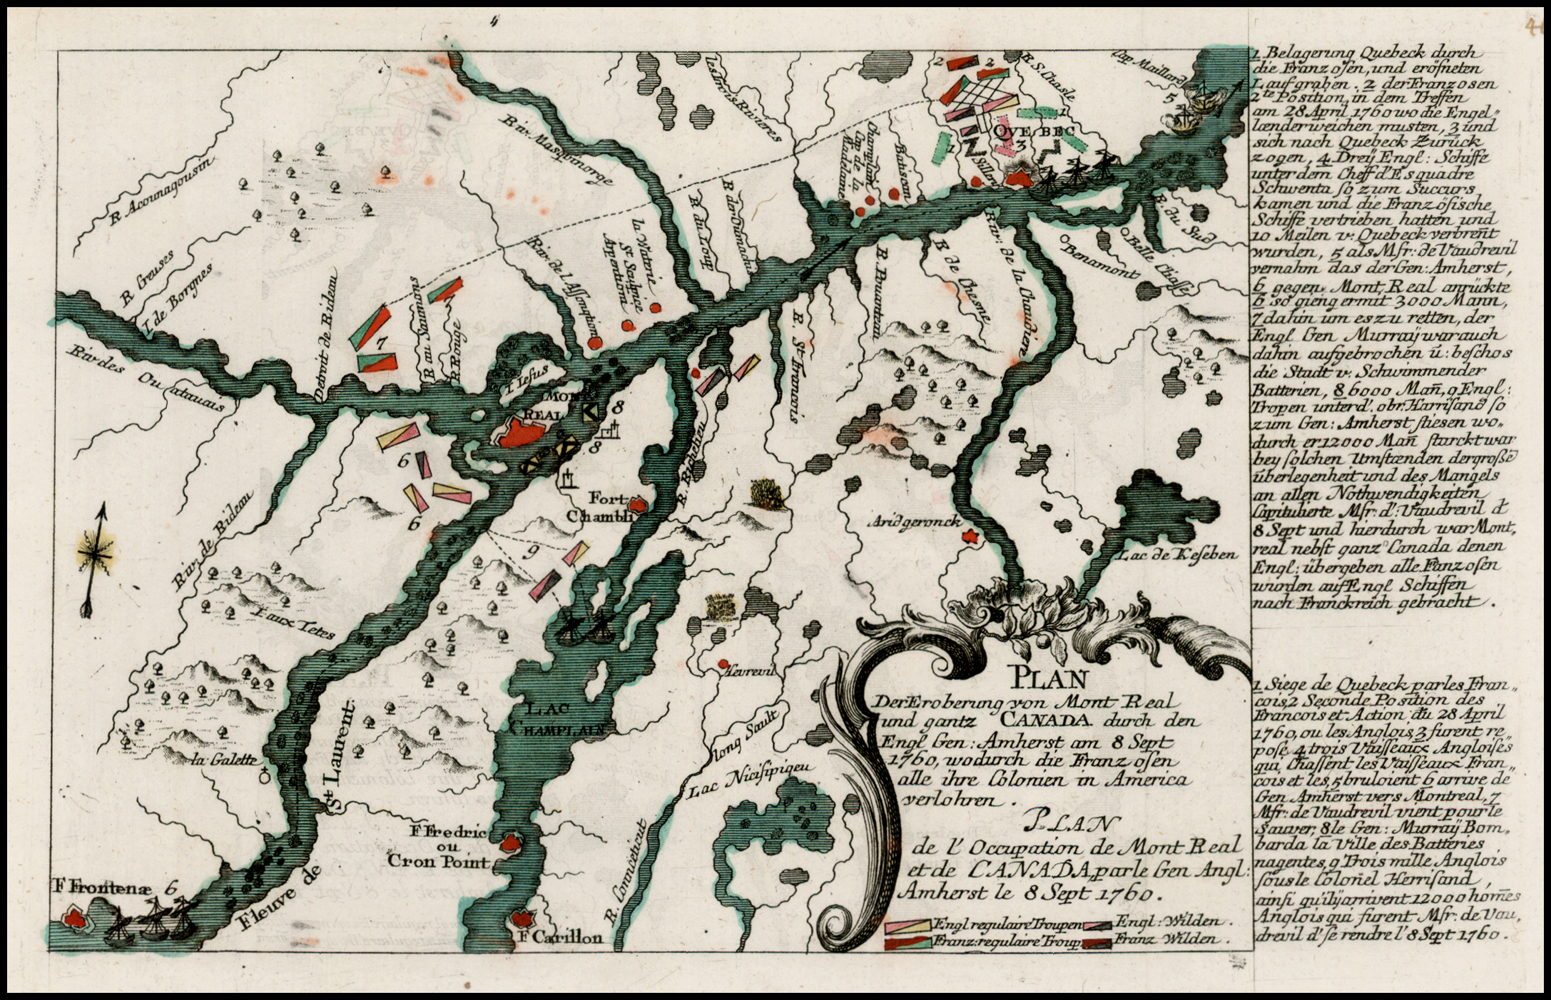 Plan Du Fort Carillon…1758 [French & Indian War Battle Plan--Fort Carillon/Ticonderoga]  - Barry Lawrence Ruderman Antique Maps Inc.